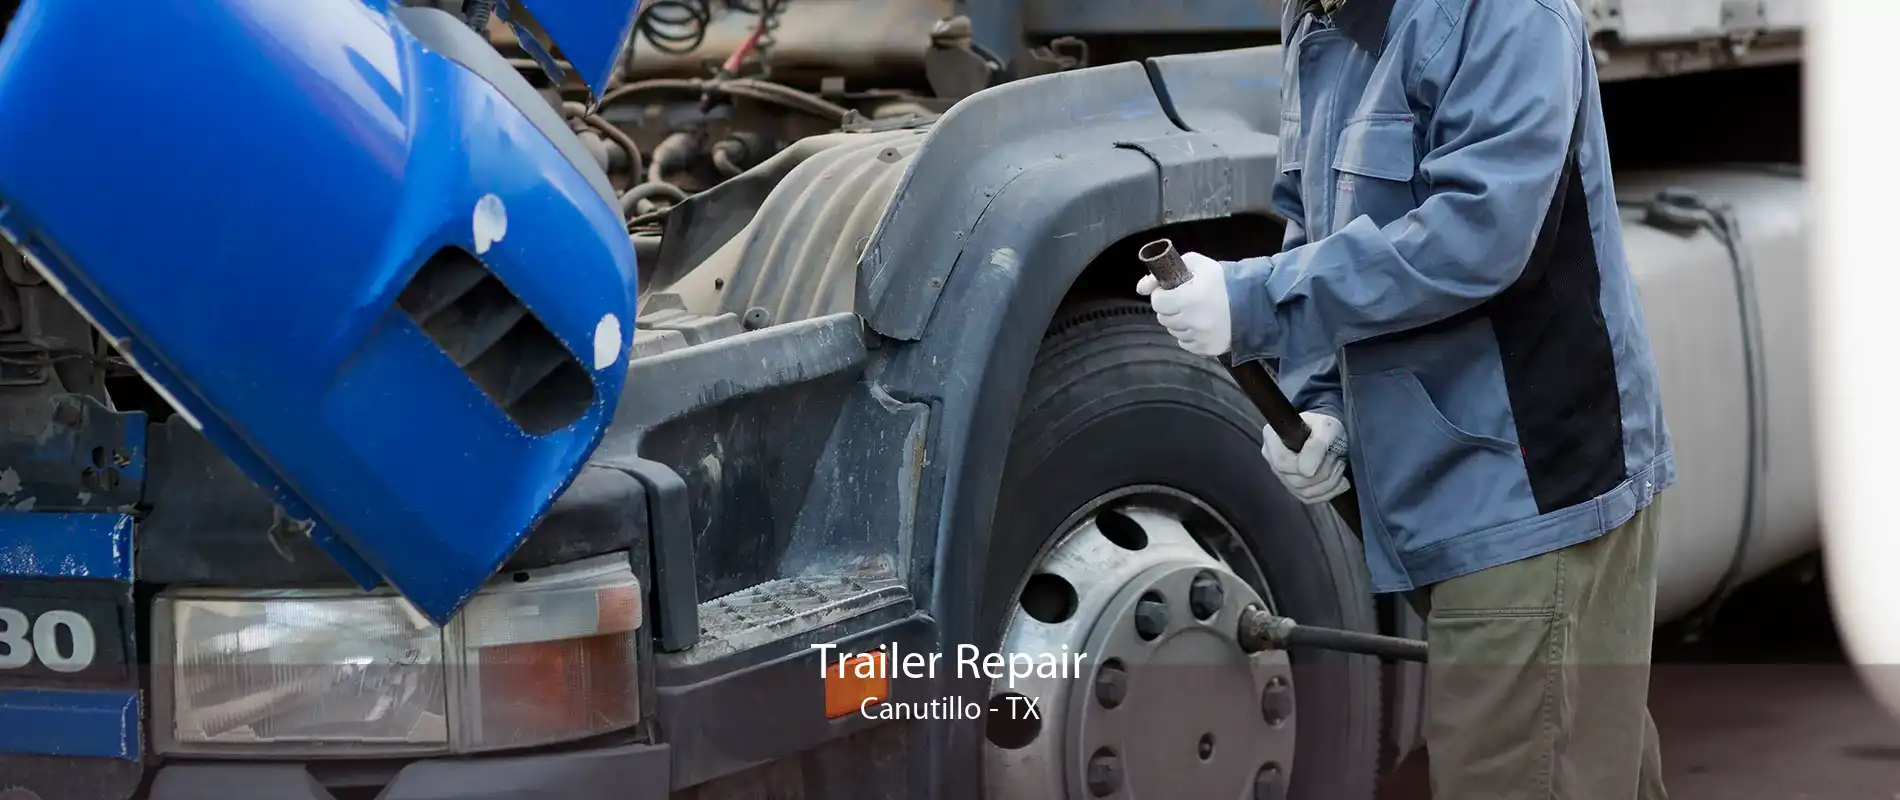 Trailer Repair Canutillo - TX